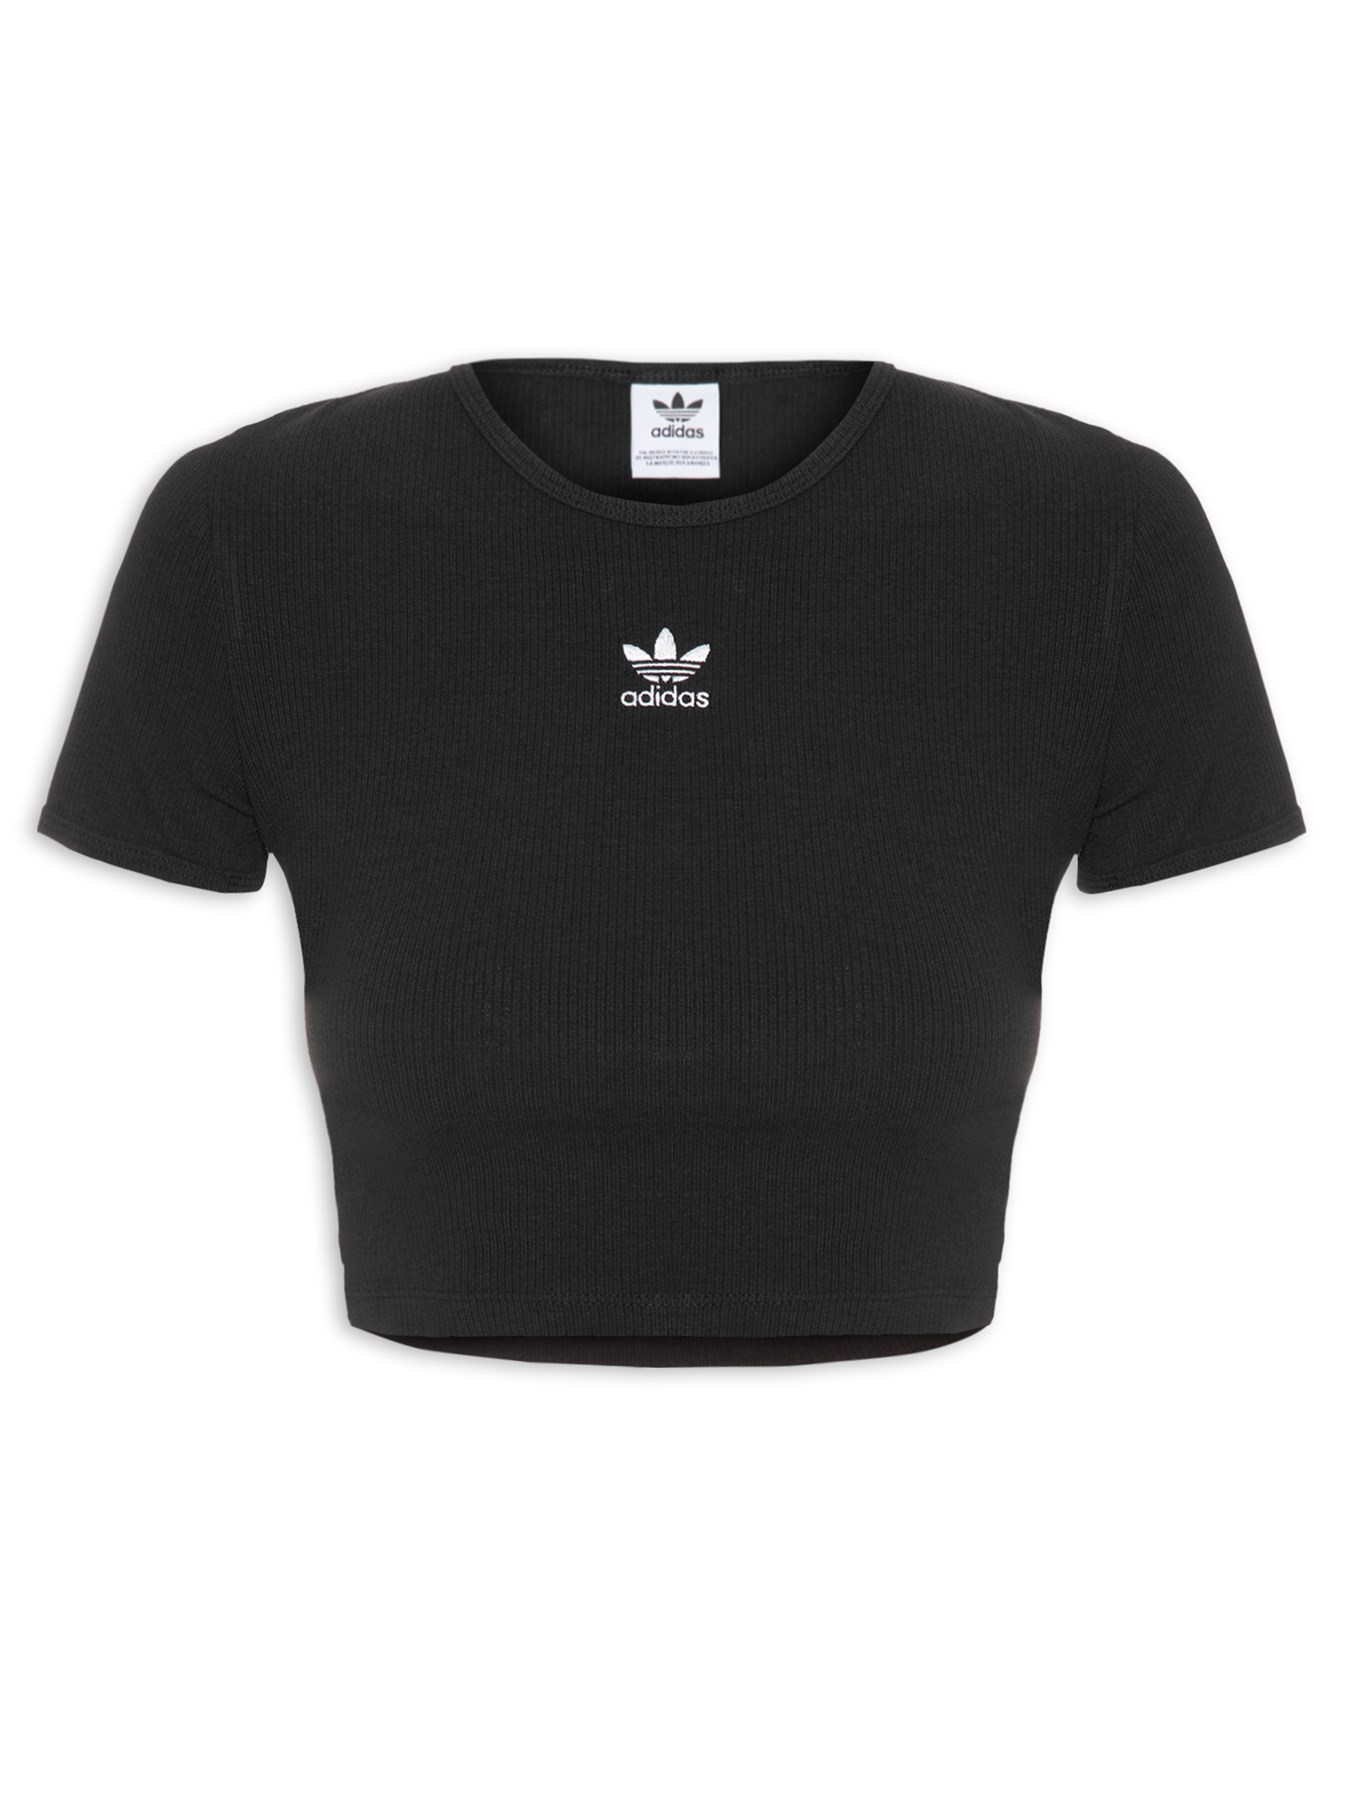 Camiseta Cropped adidas Sportswear Logo Preta - Compre Agora